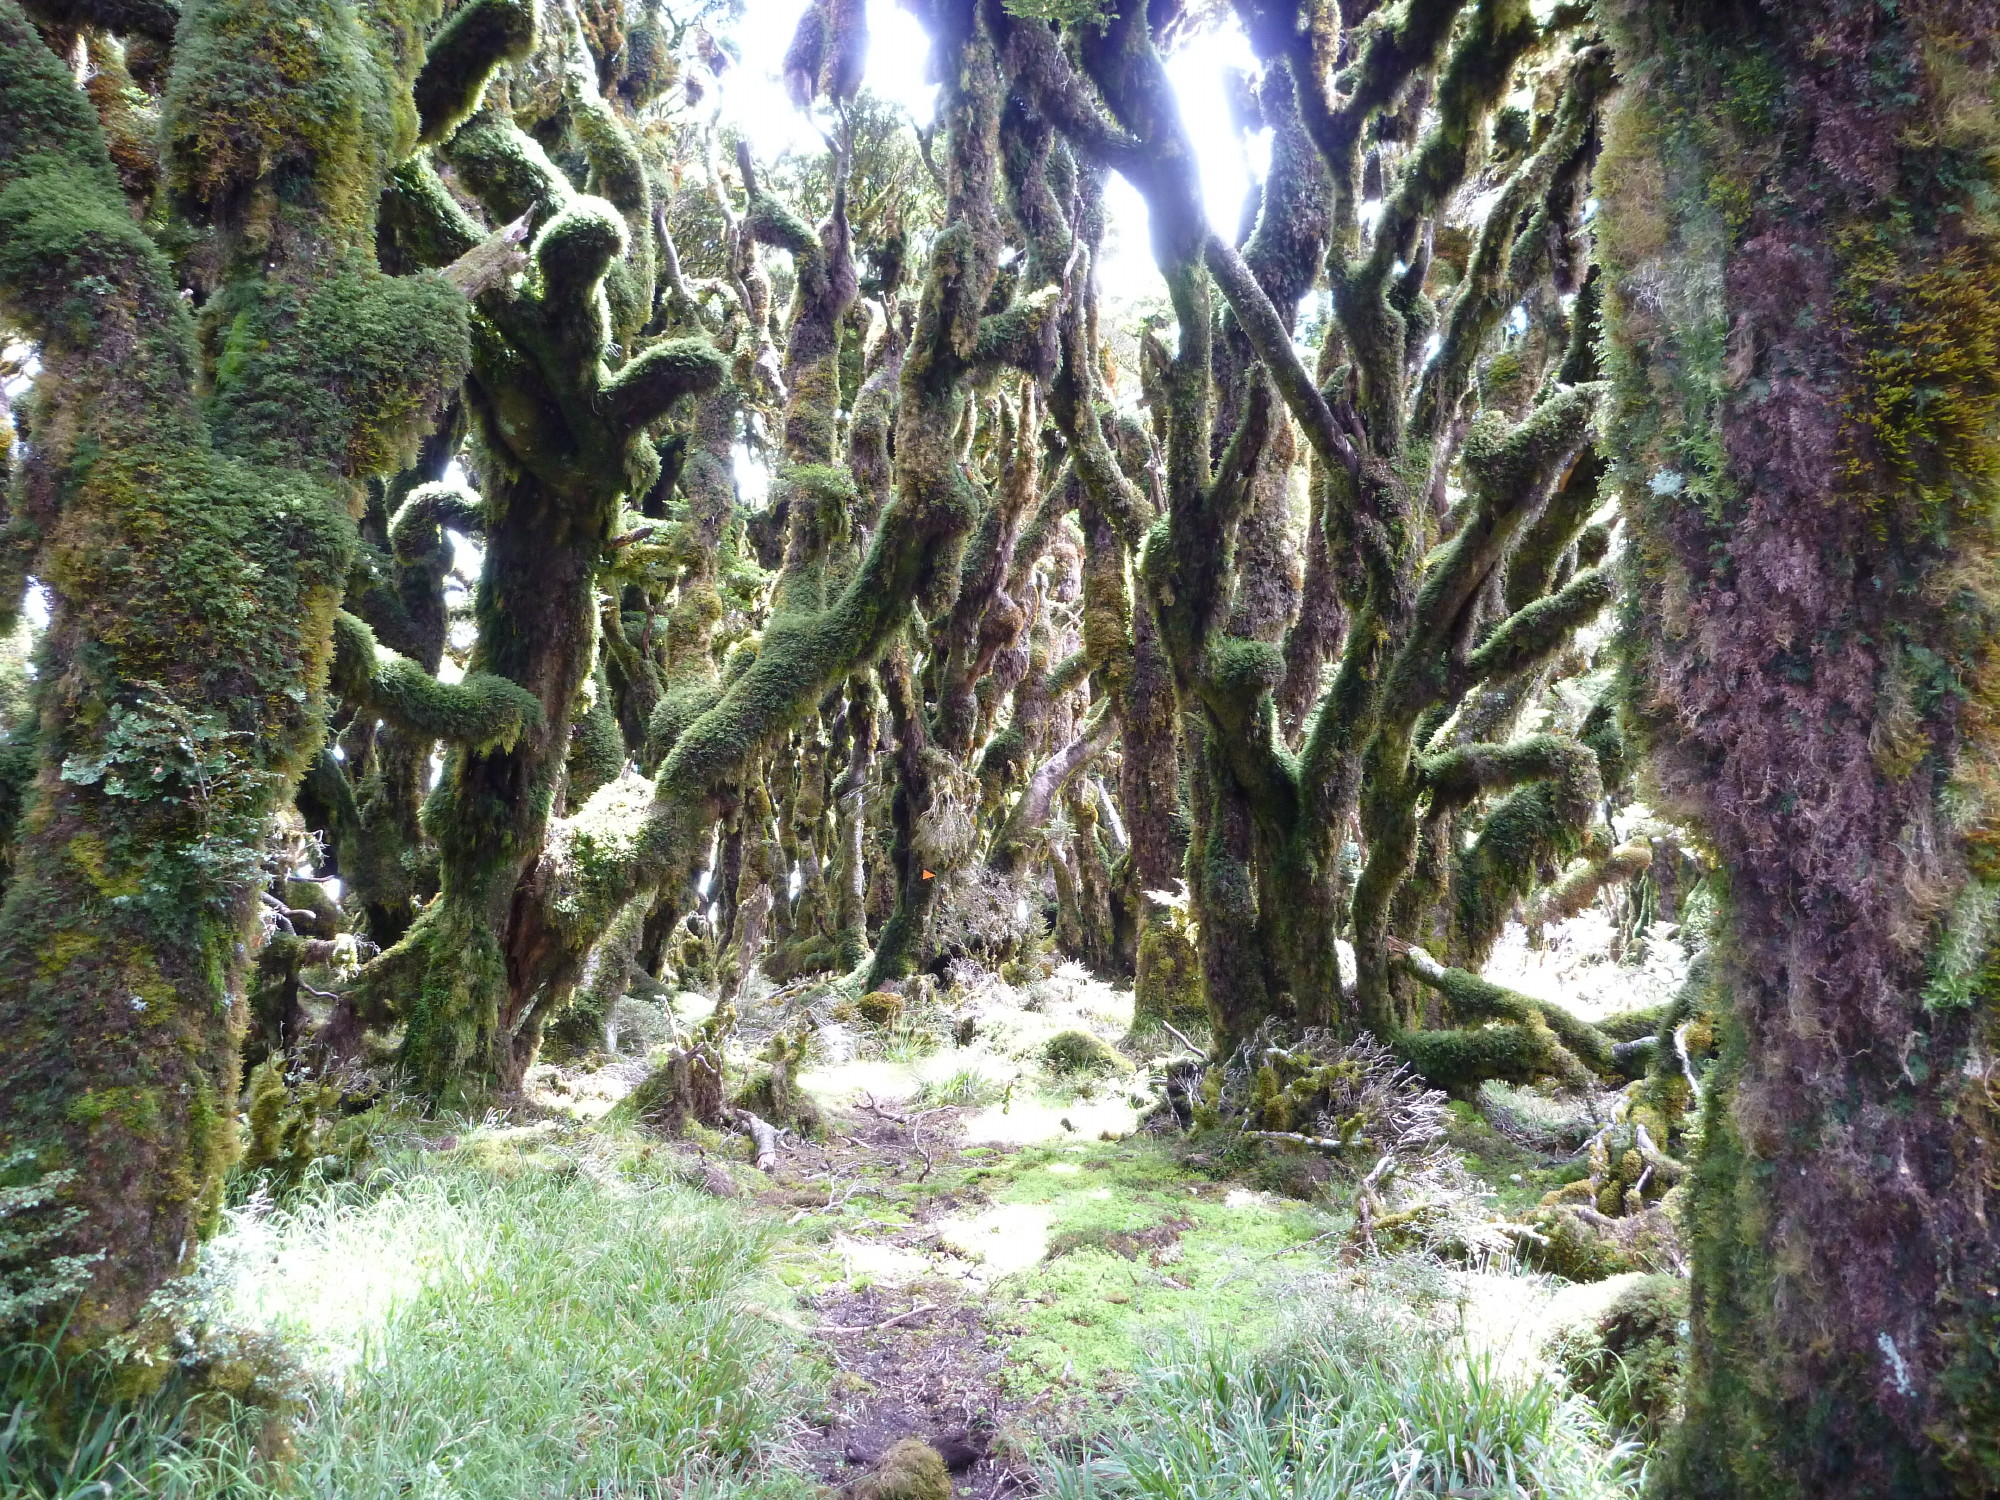 The Tolkein like Goblin forest near Manuoha Hut